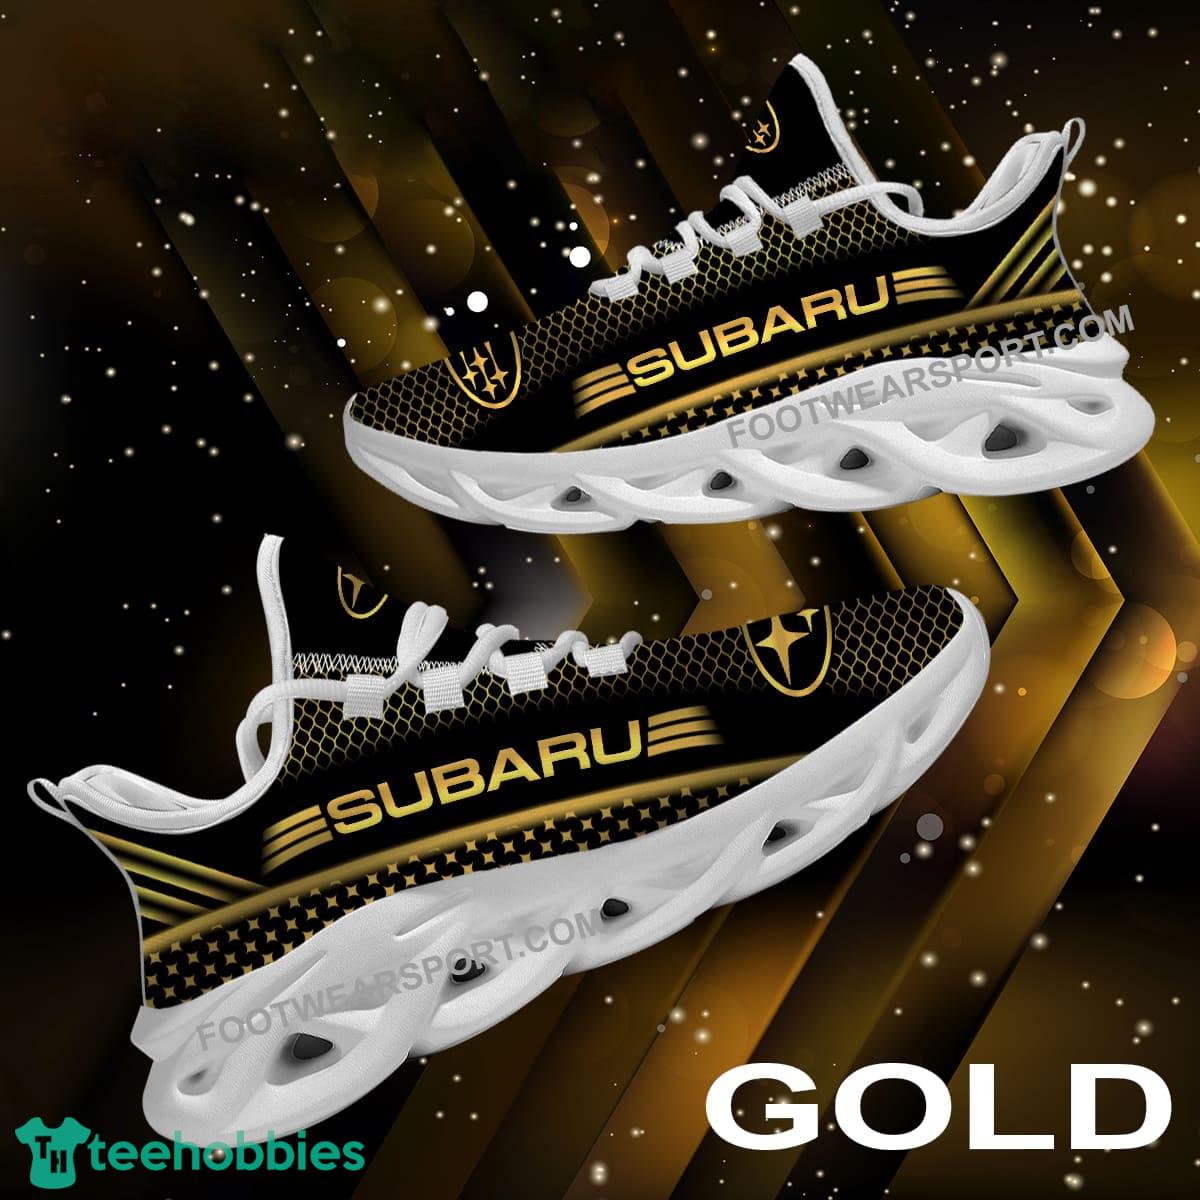 Subaru Racing Max Soul Shoes Gold Sport Sneaker Recognizable For Fans Gift - Subaru Racing Max Soul Shoes Gold Sport Sneaker Recognizable For Fans Gift